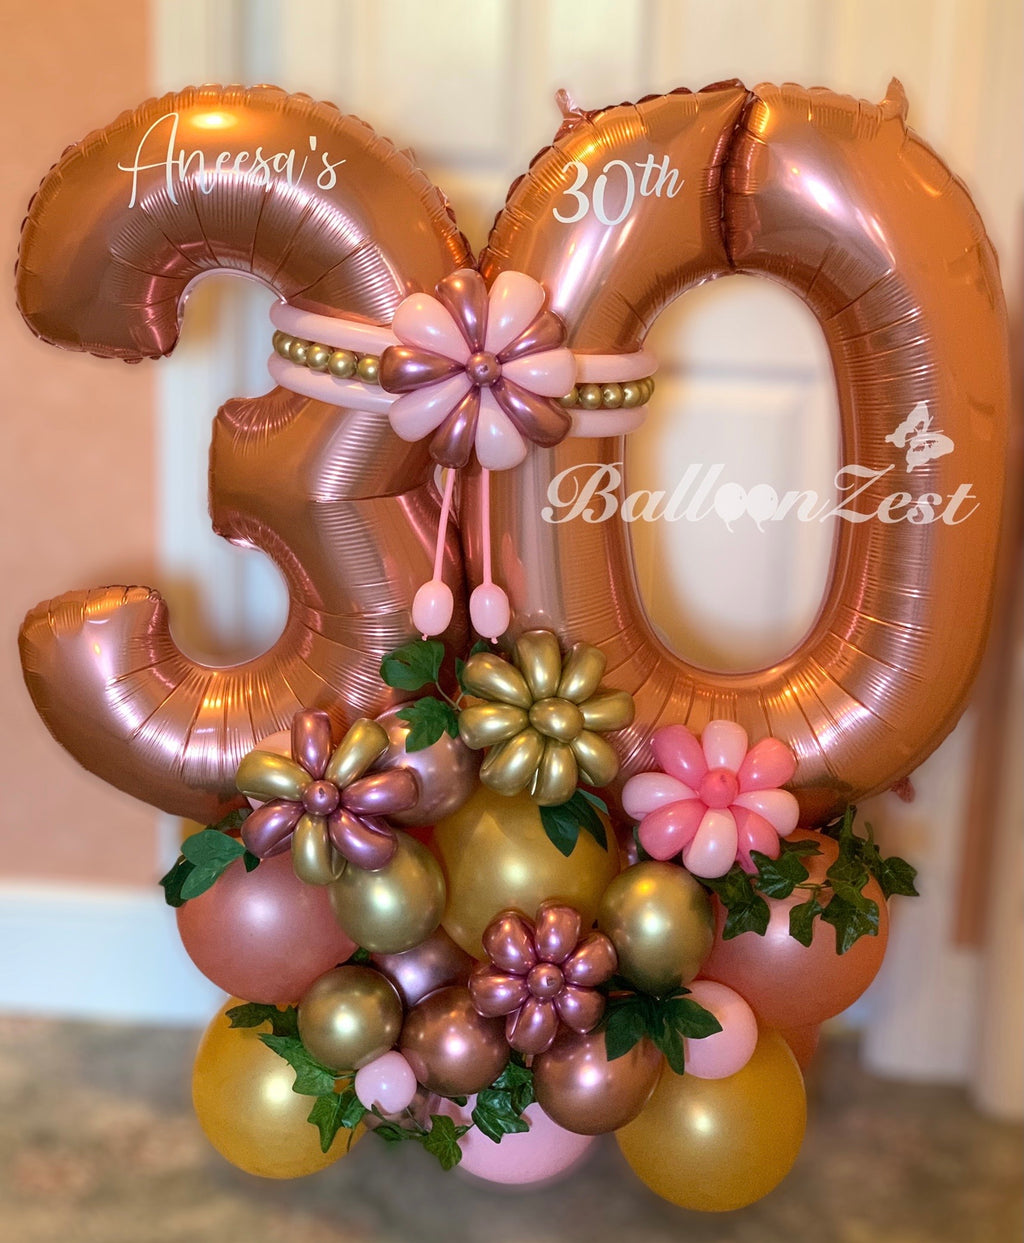 Large Spiderman Theme Birthday Number Display – BalloonZest